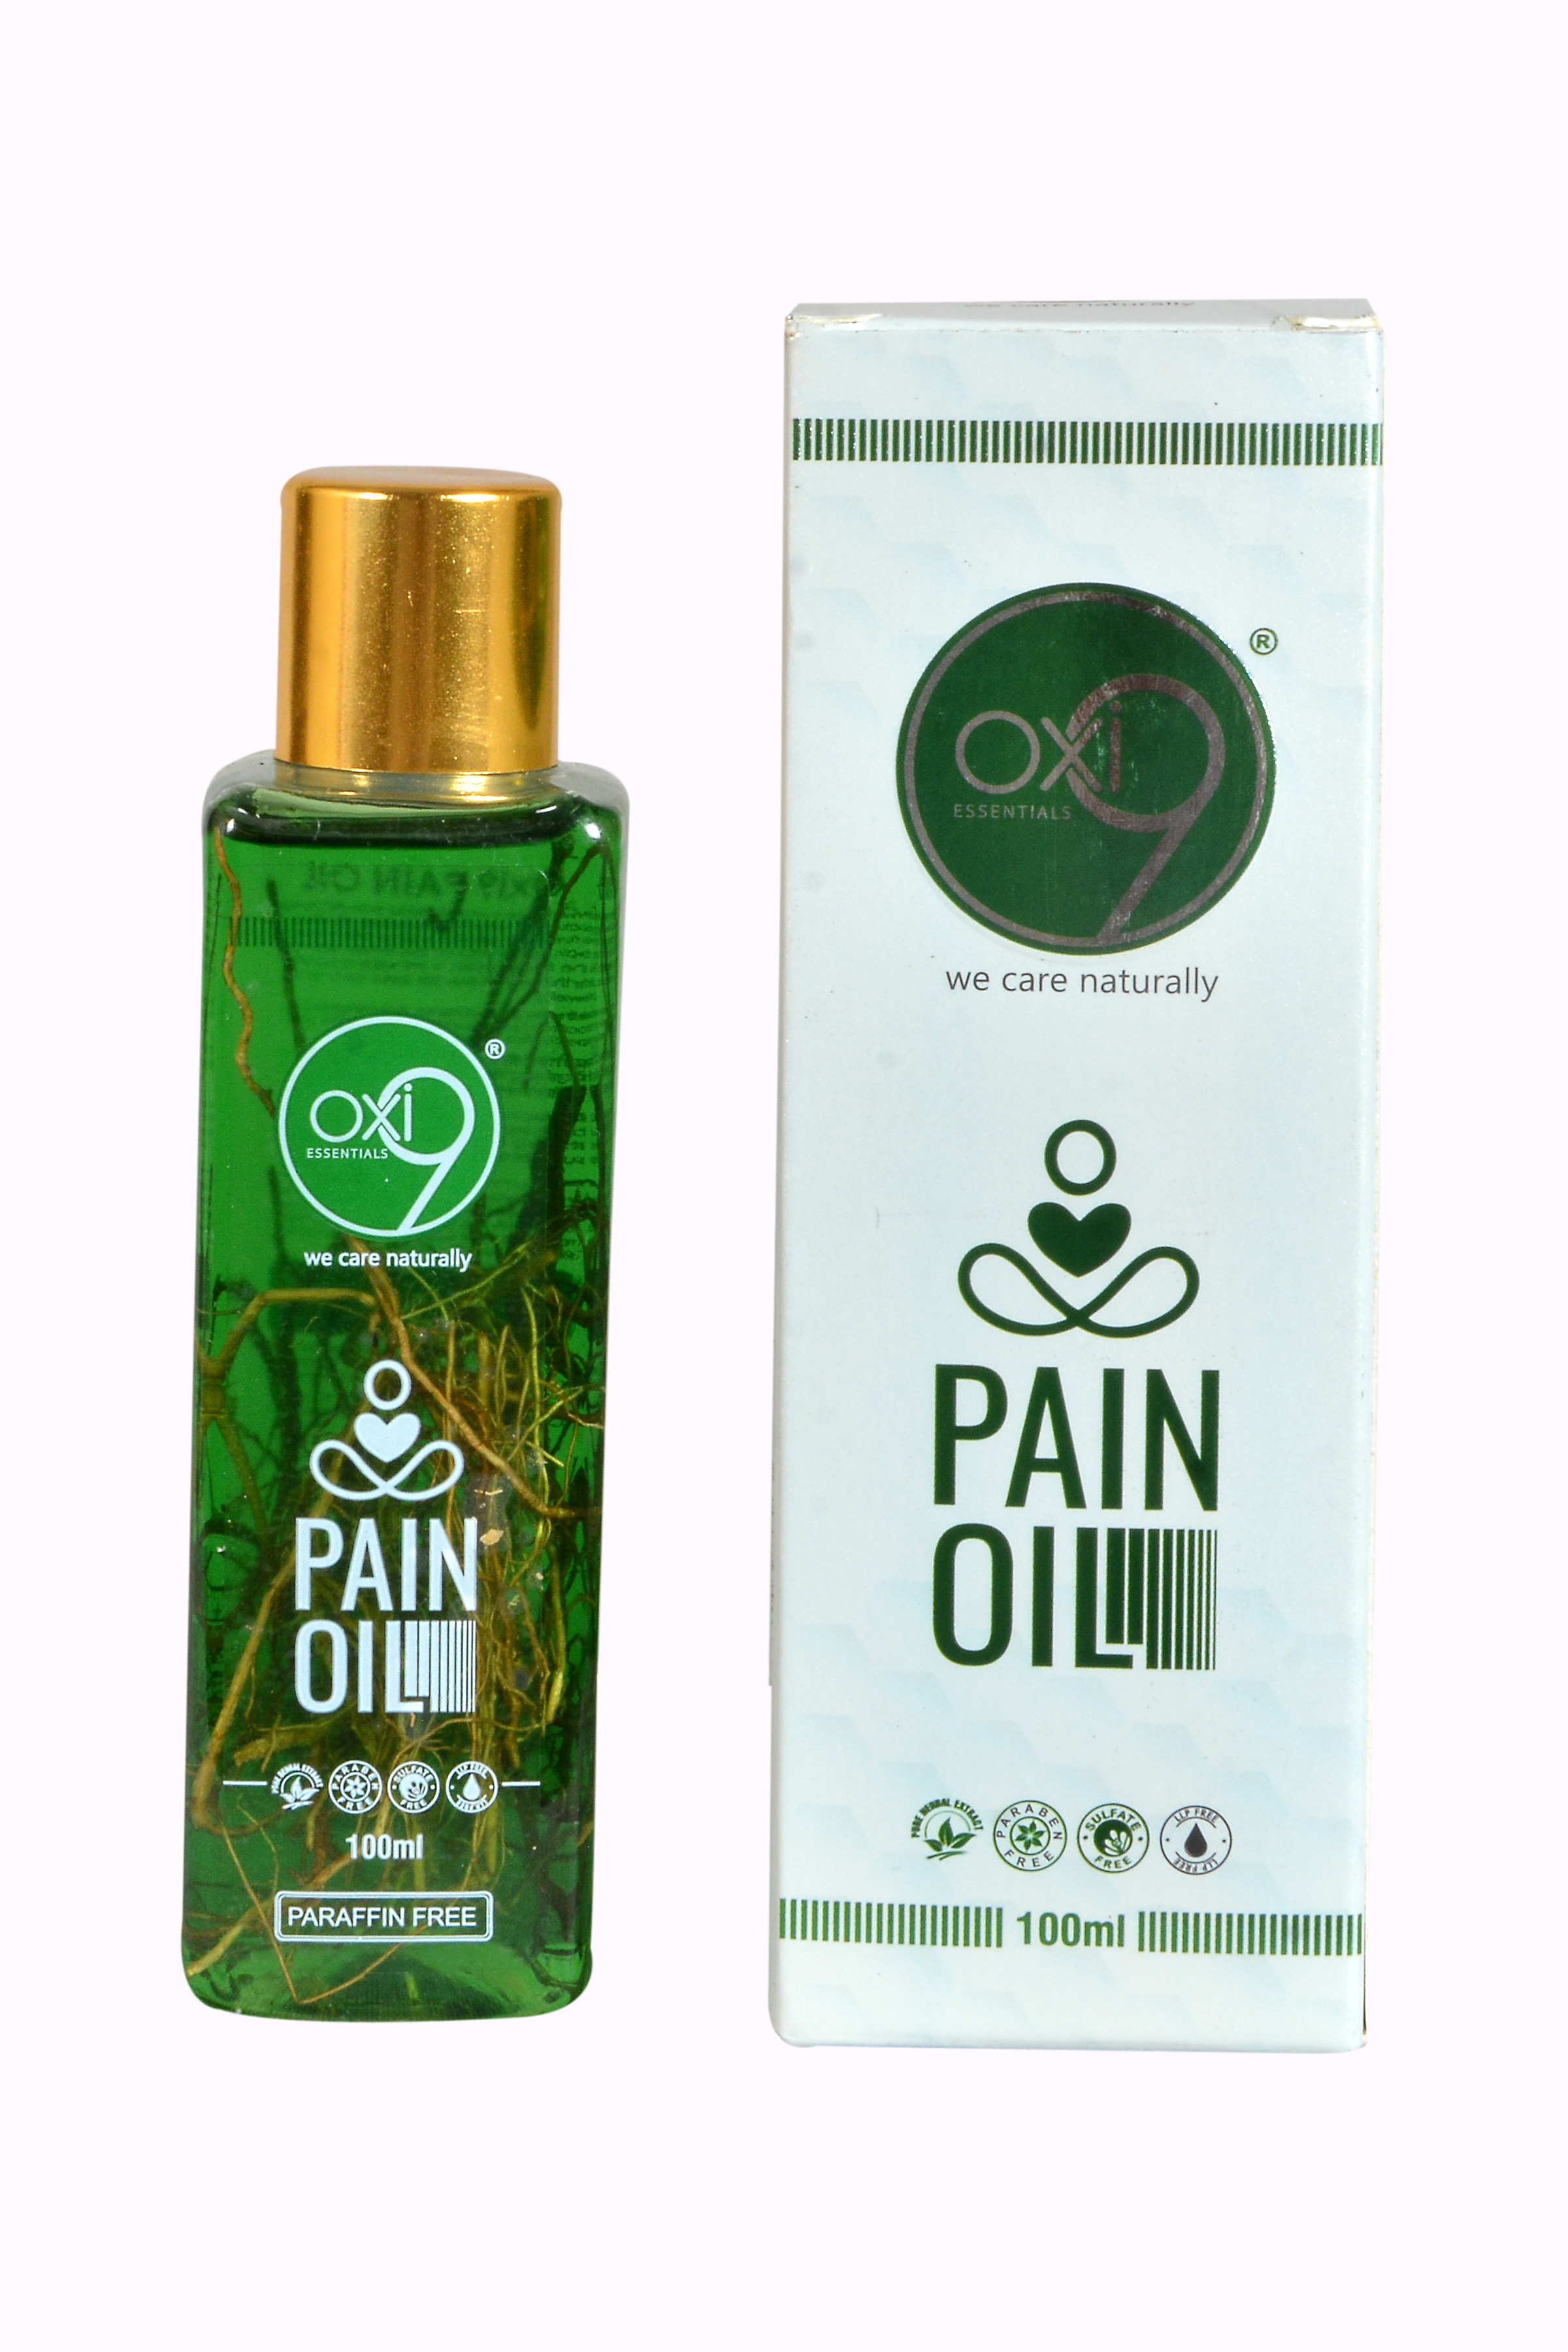 Pain Oil - 100ml | Paraben Free